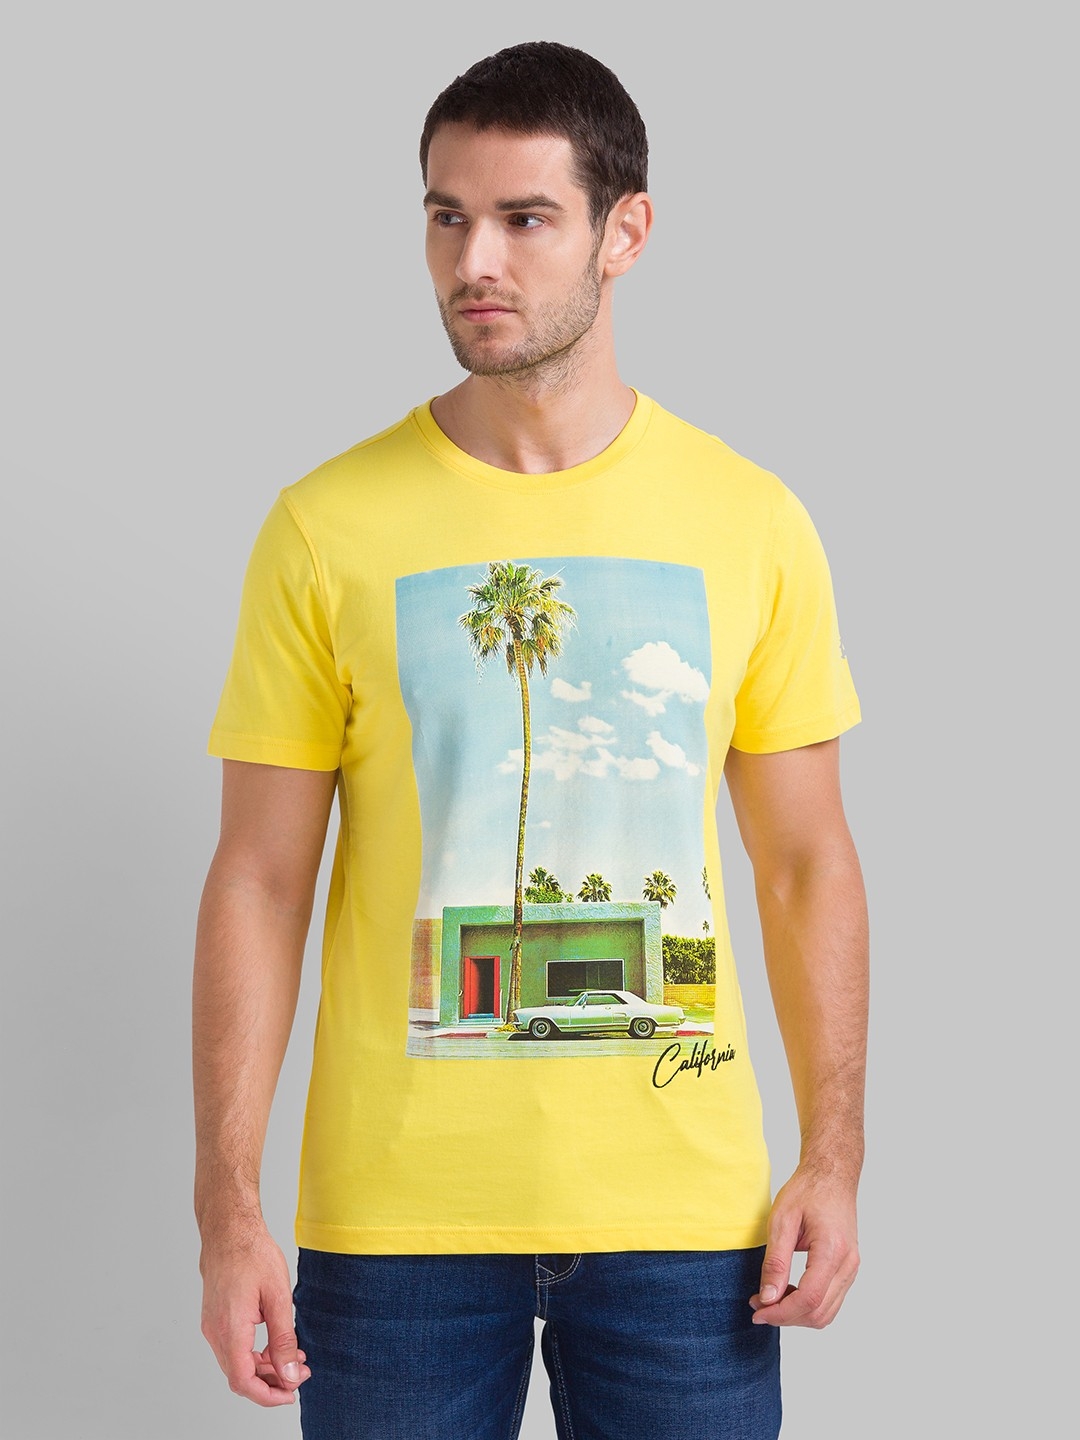 PARX Yellow T-Shirt